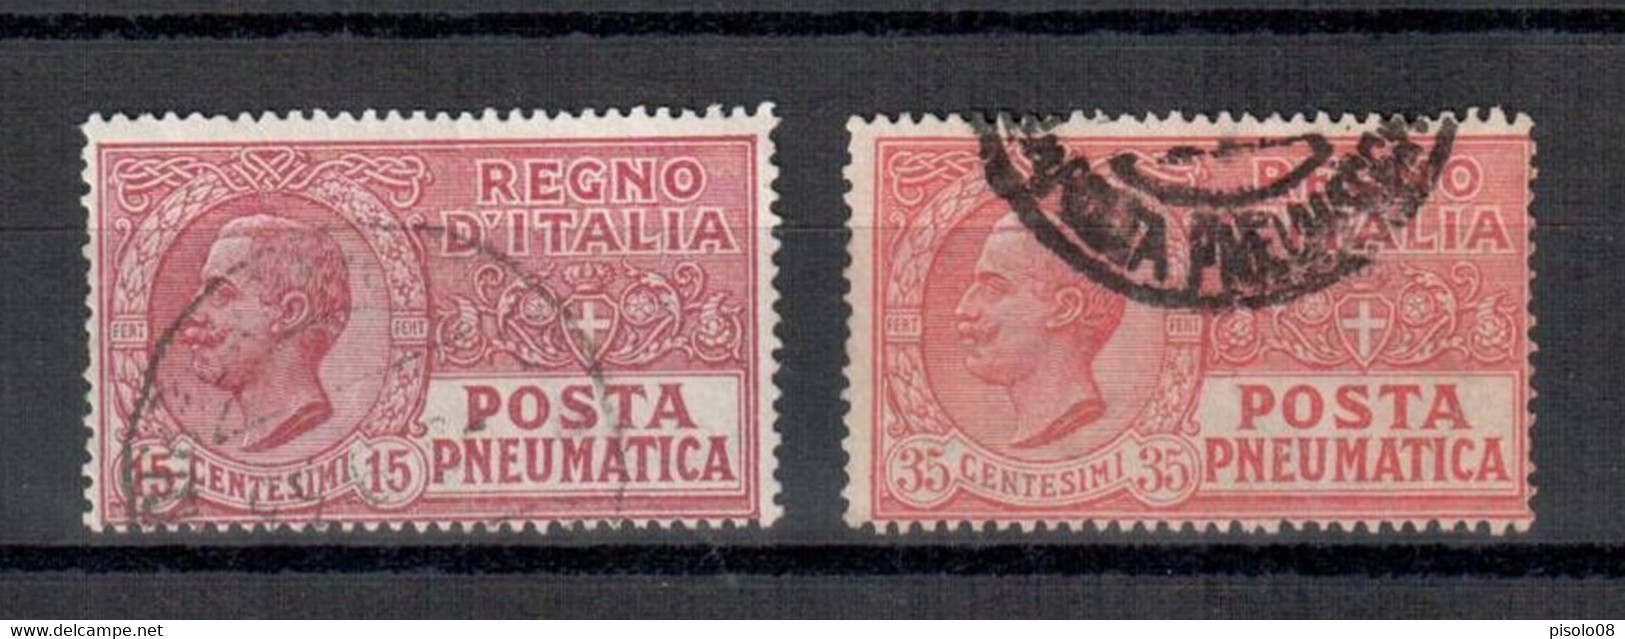 REGNO 1927-28 POSTA PNEUMATICA USATA - Pneumatische Post